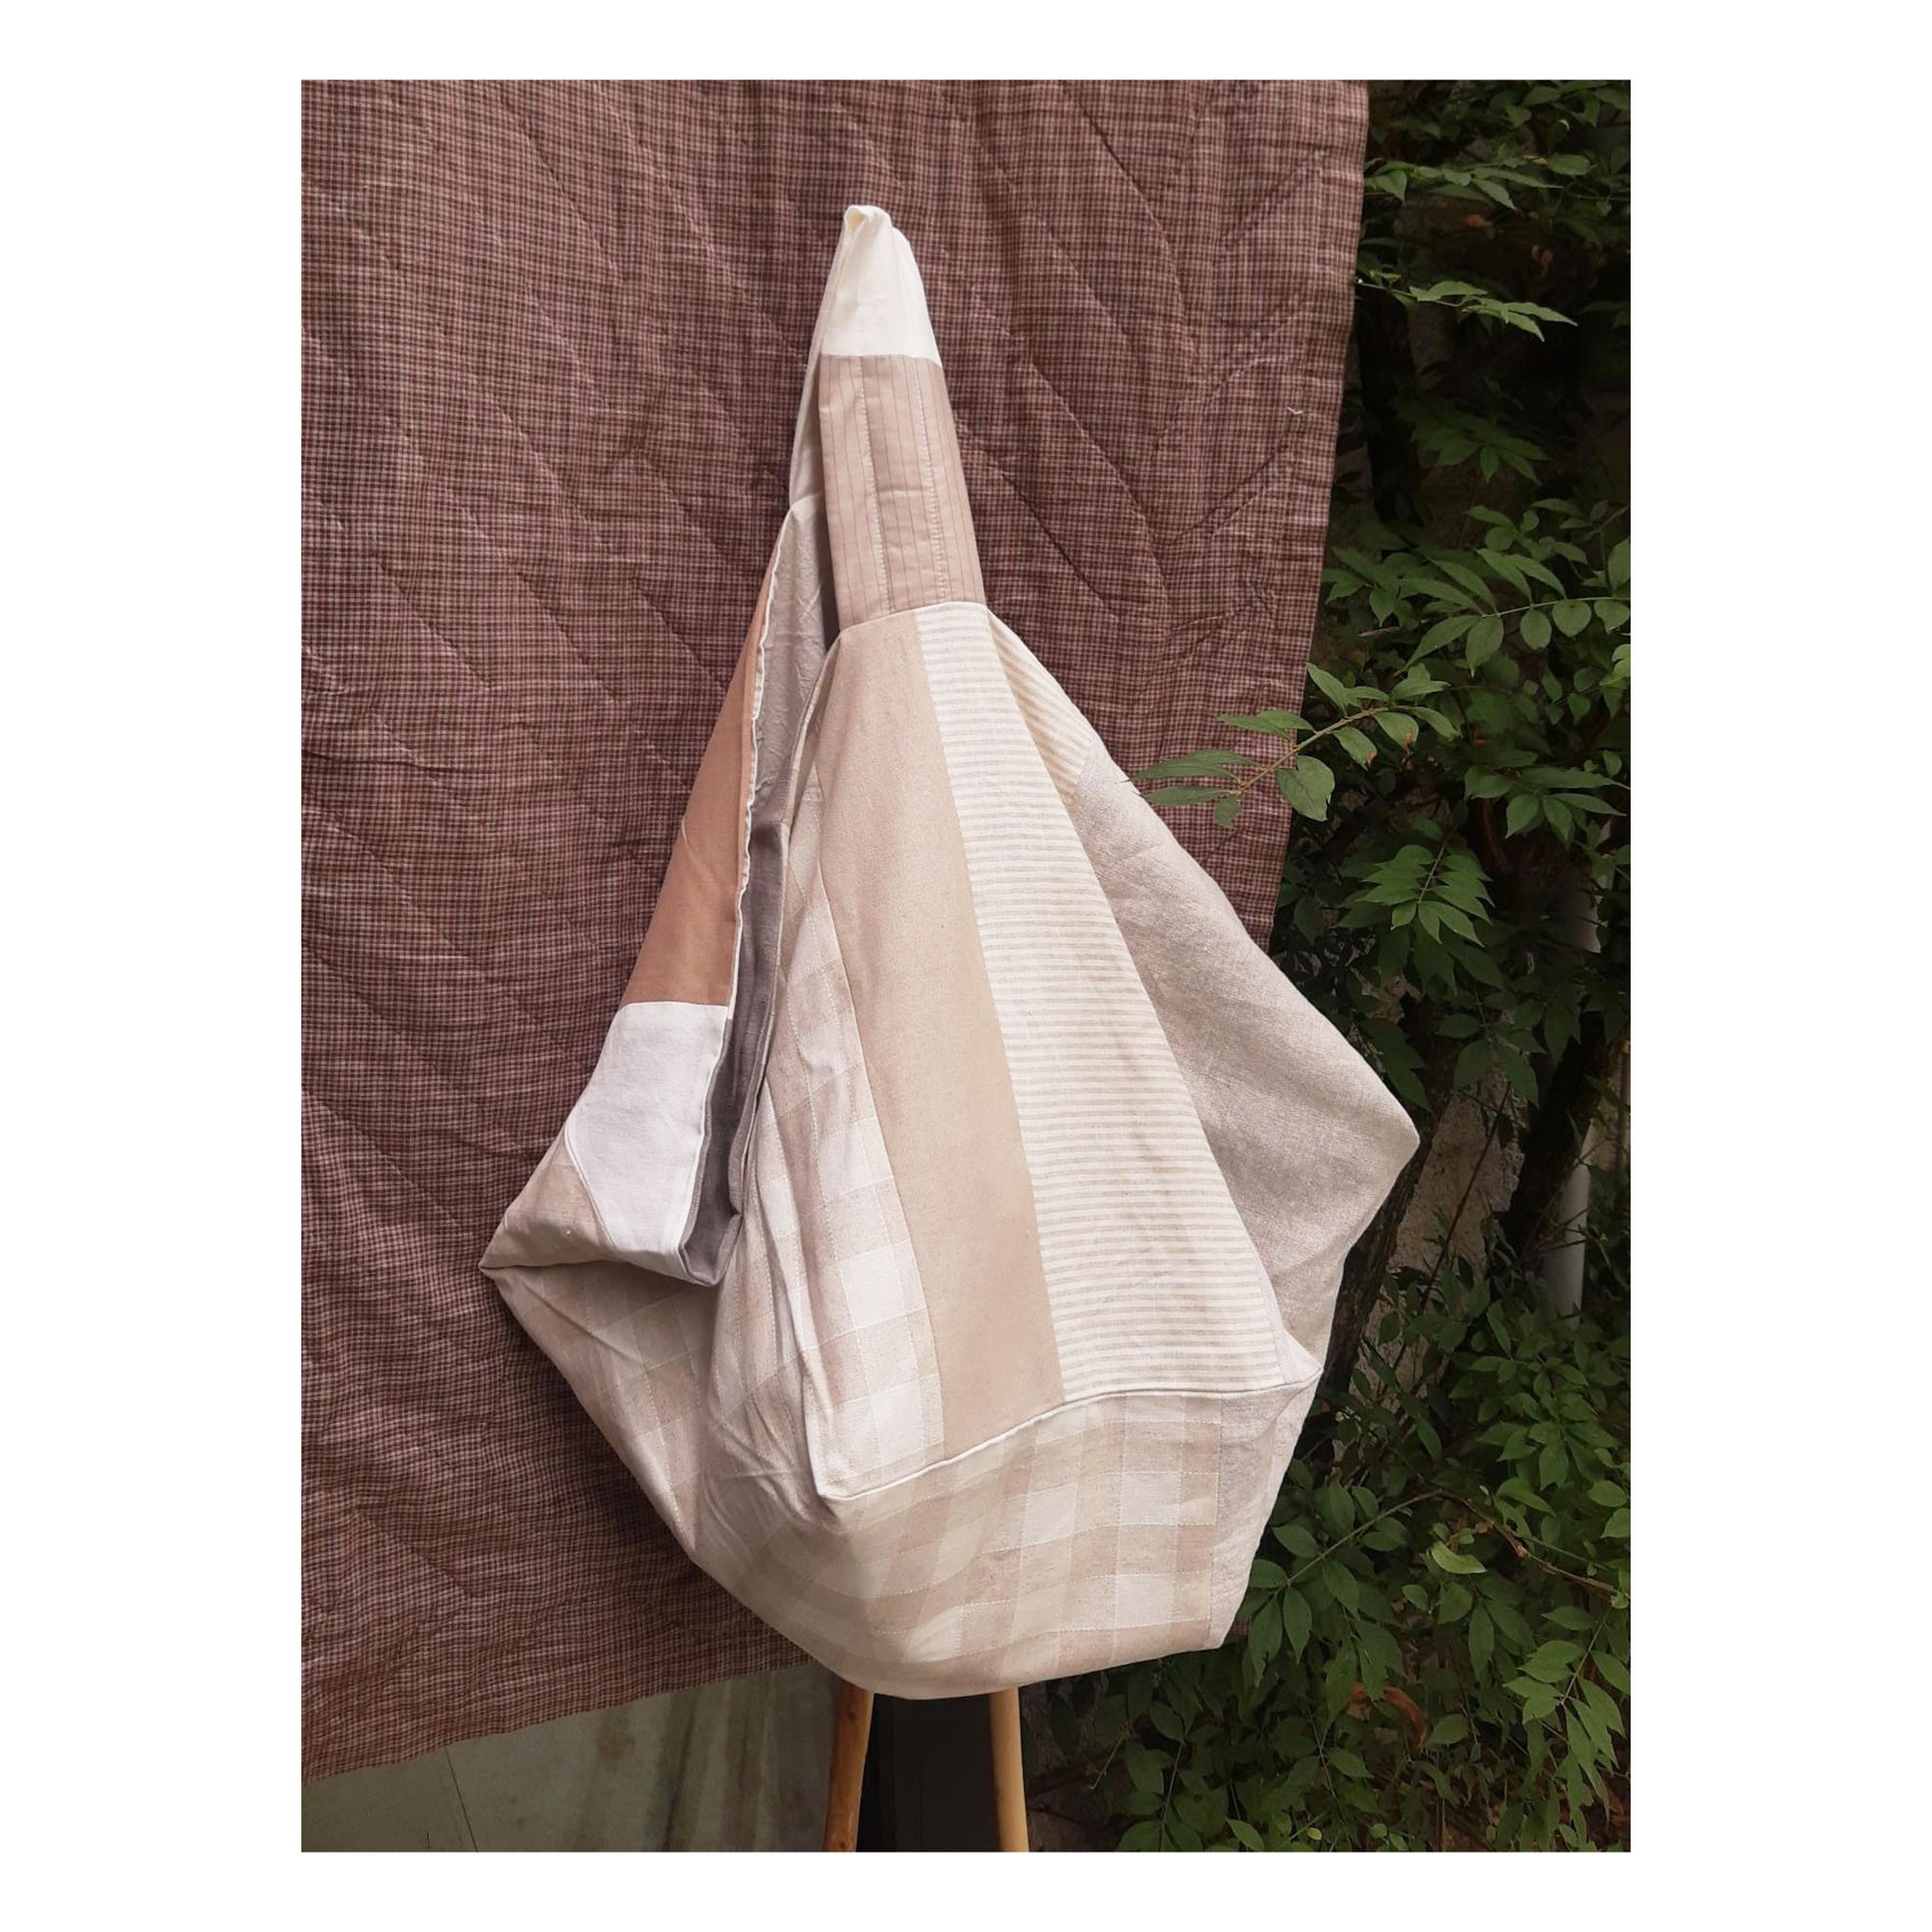 Atelier Neeltje Geurtsen - Sac large Mom bag réversible en coton bio - Beige